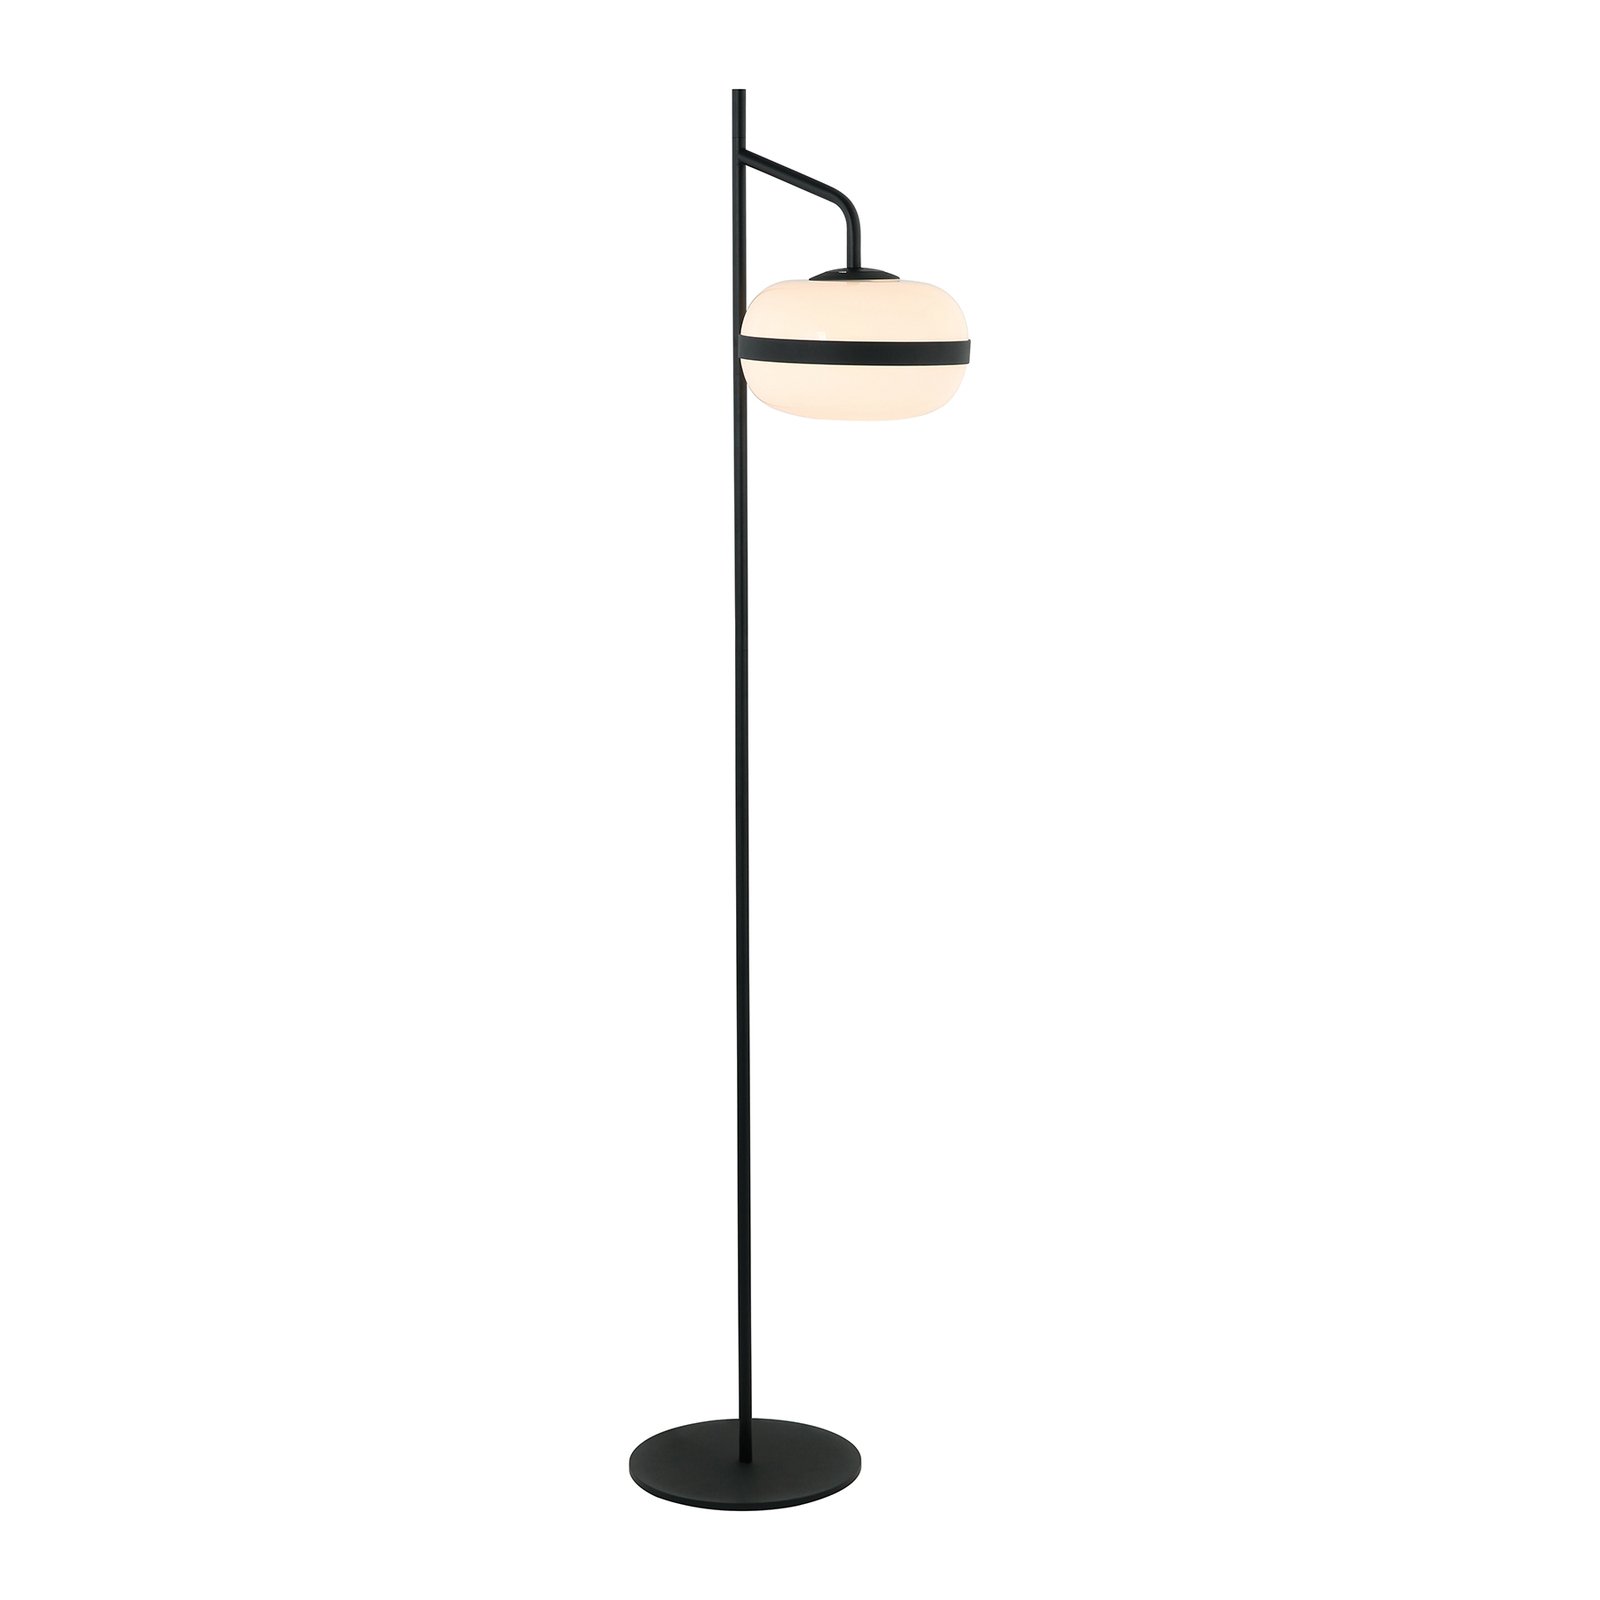 Palma floor lamp with glass shade